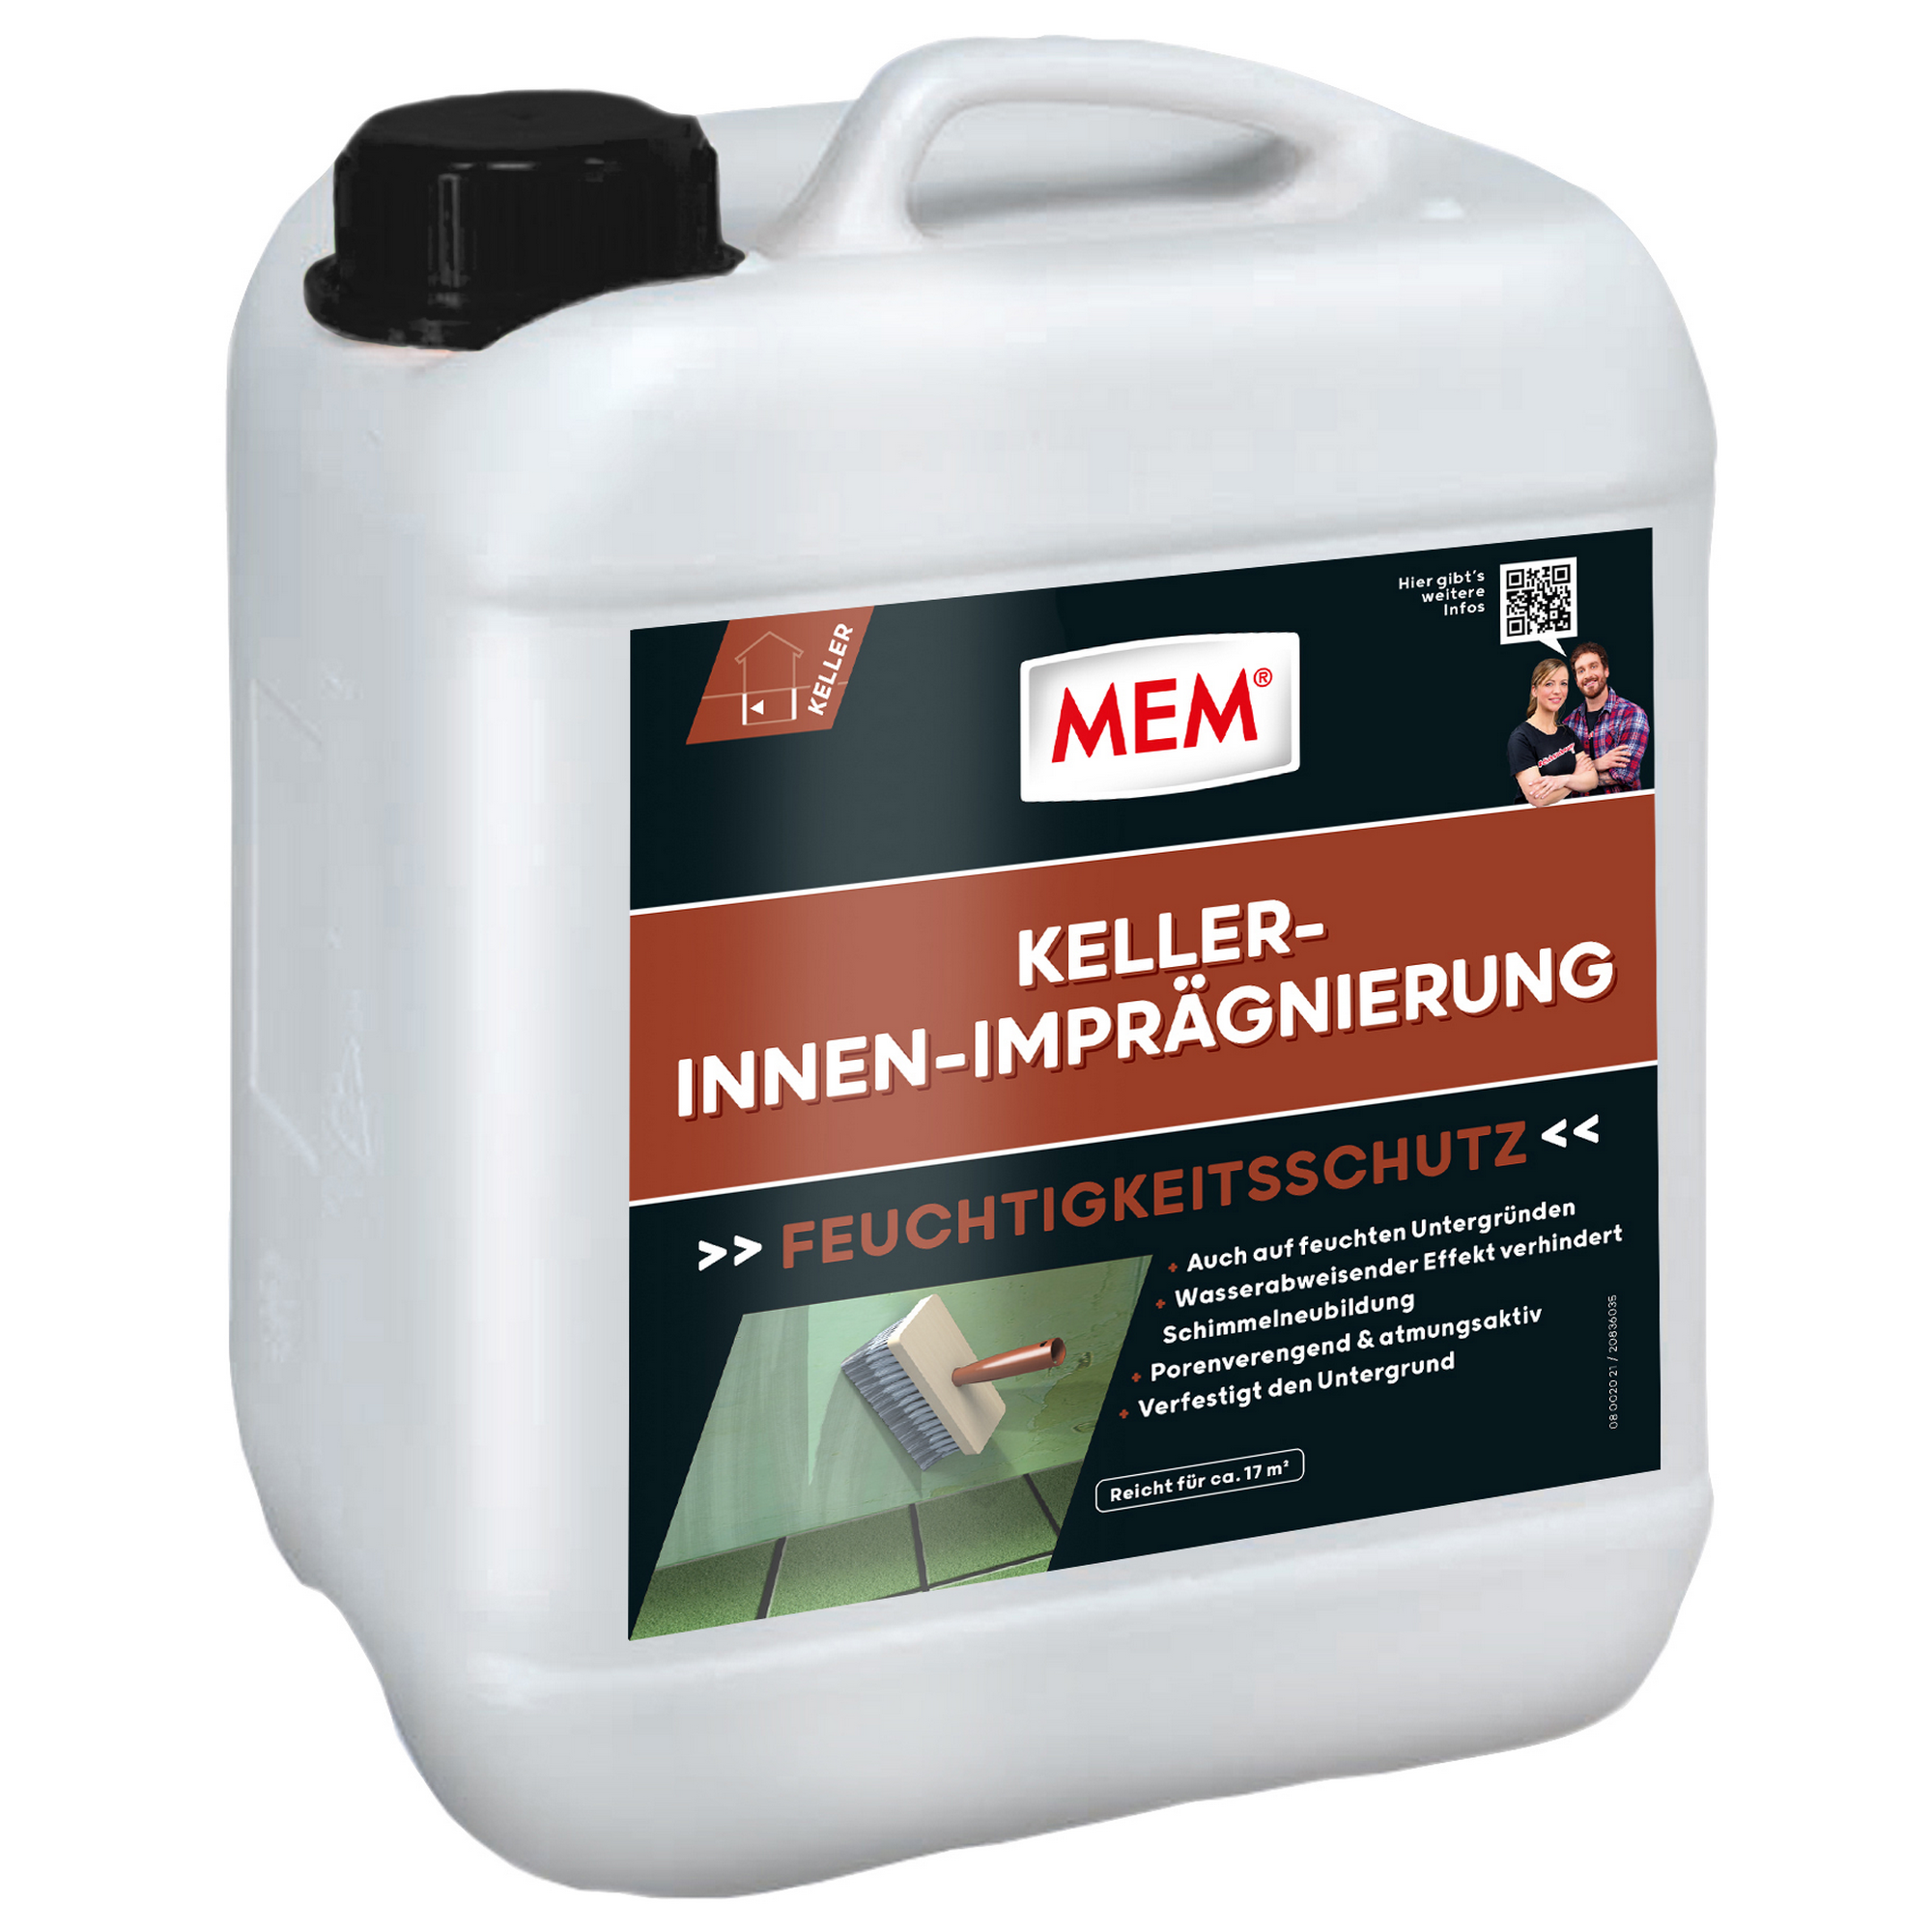 Keller-Innen-Imprägnierung 5 l + product picture